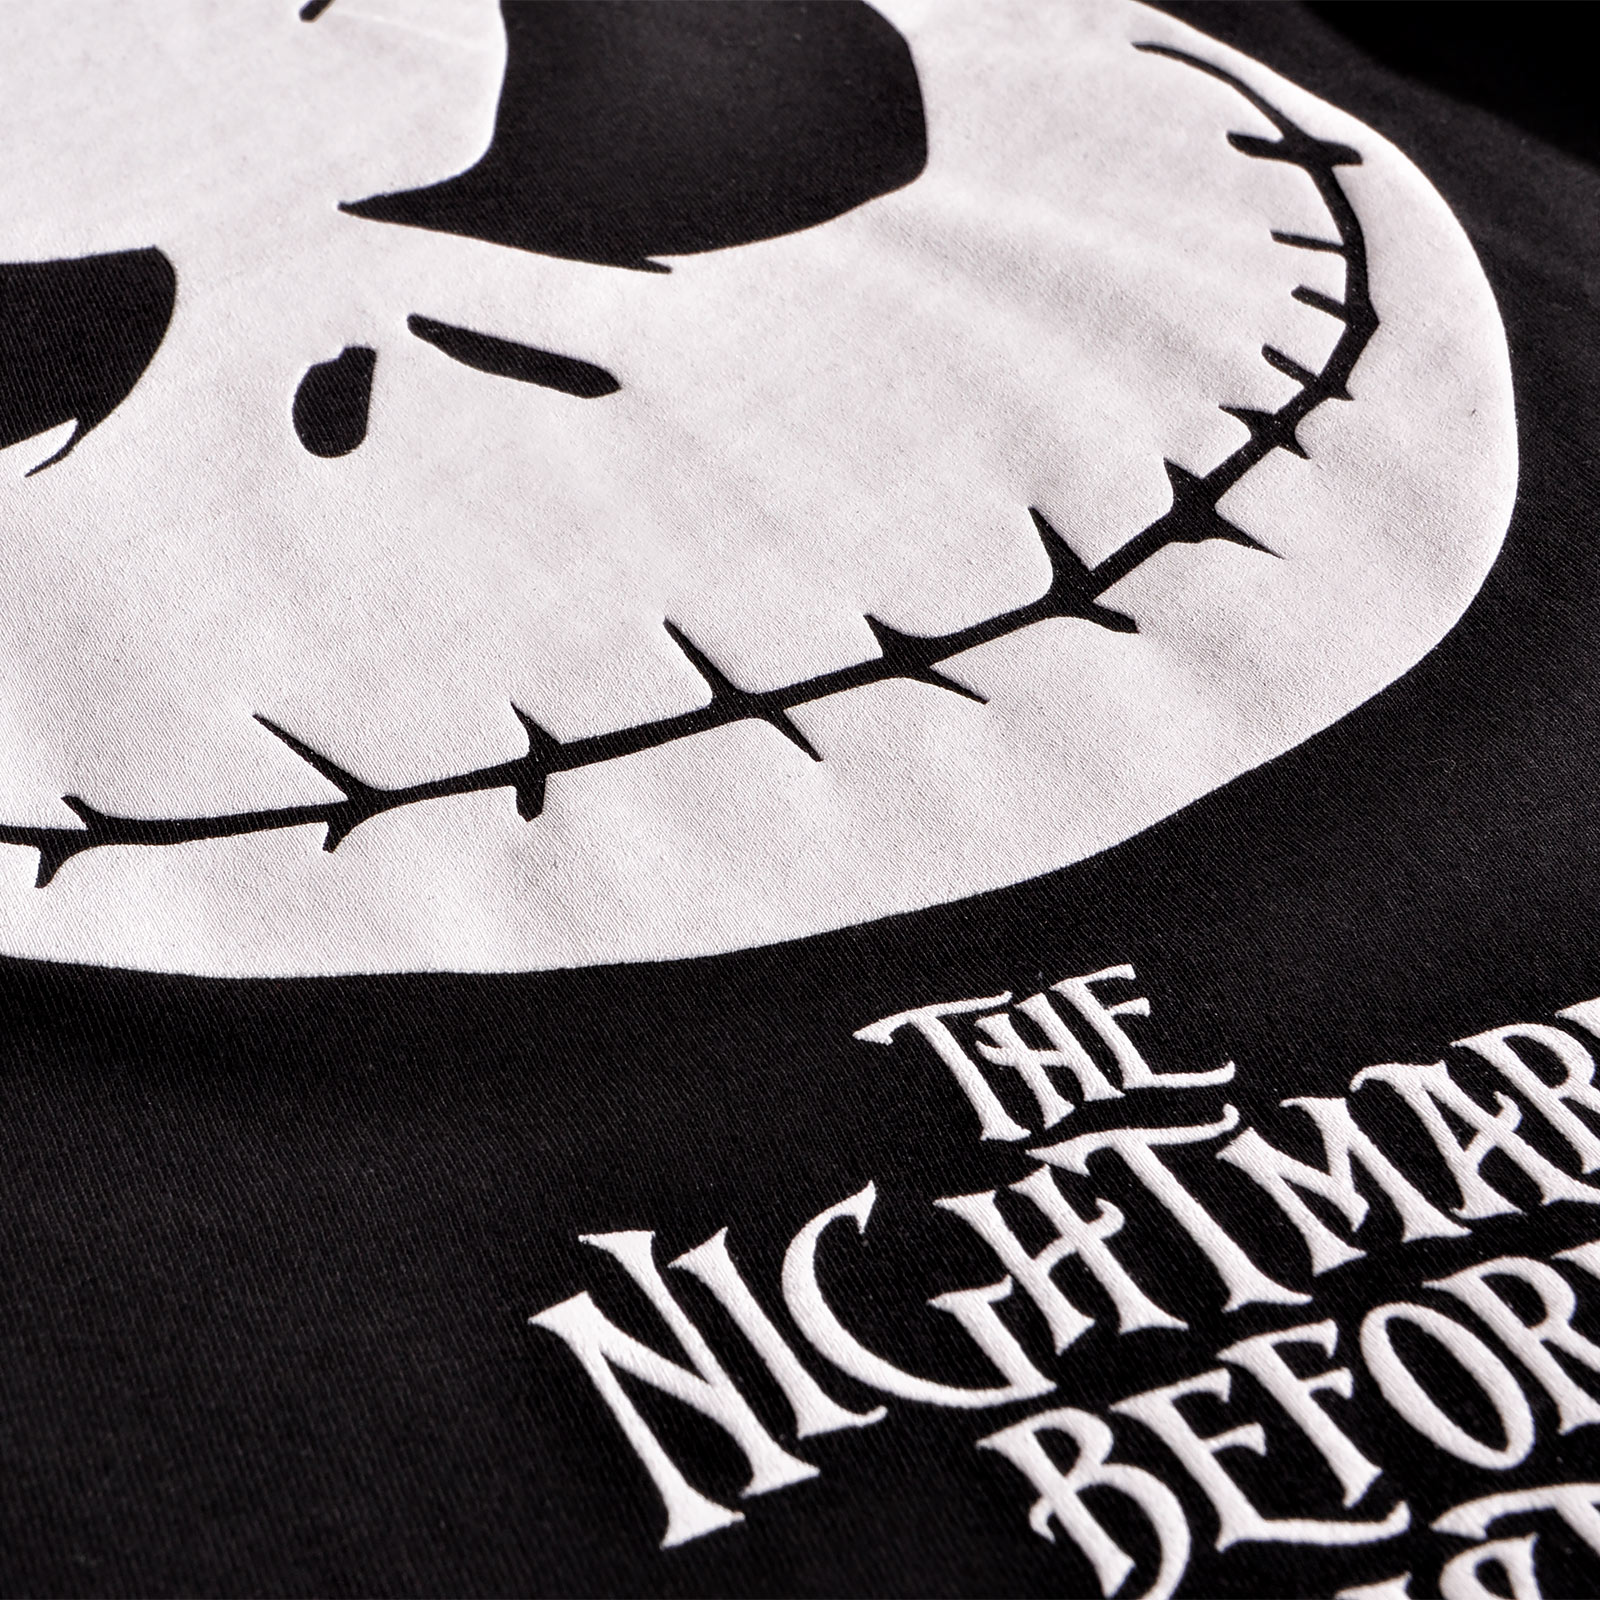 Nightmare Before Christmas - Jack Smile T-Shirt Damen schwarz